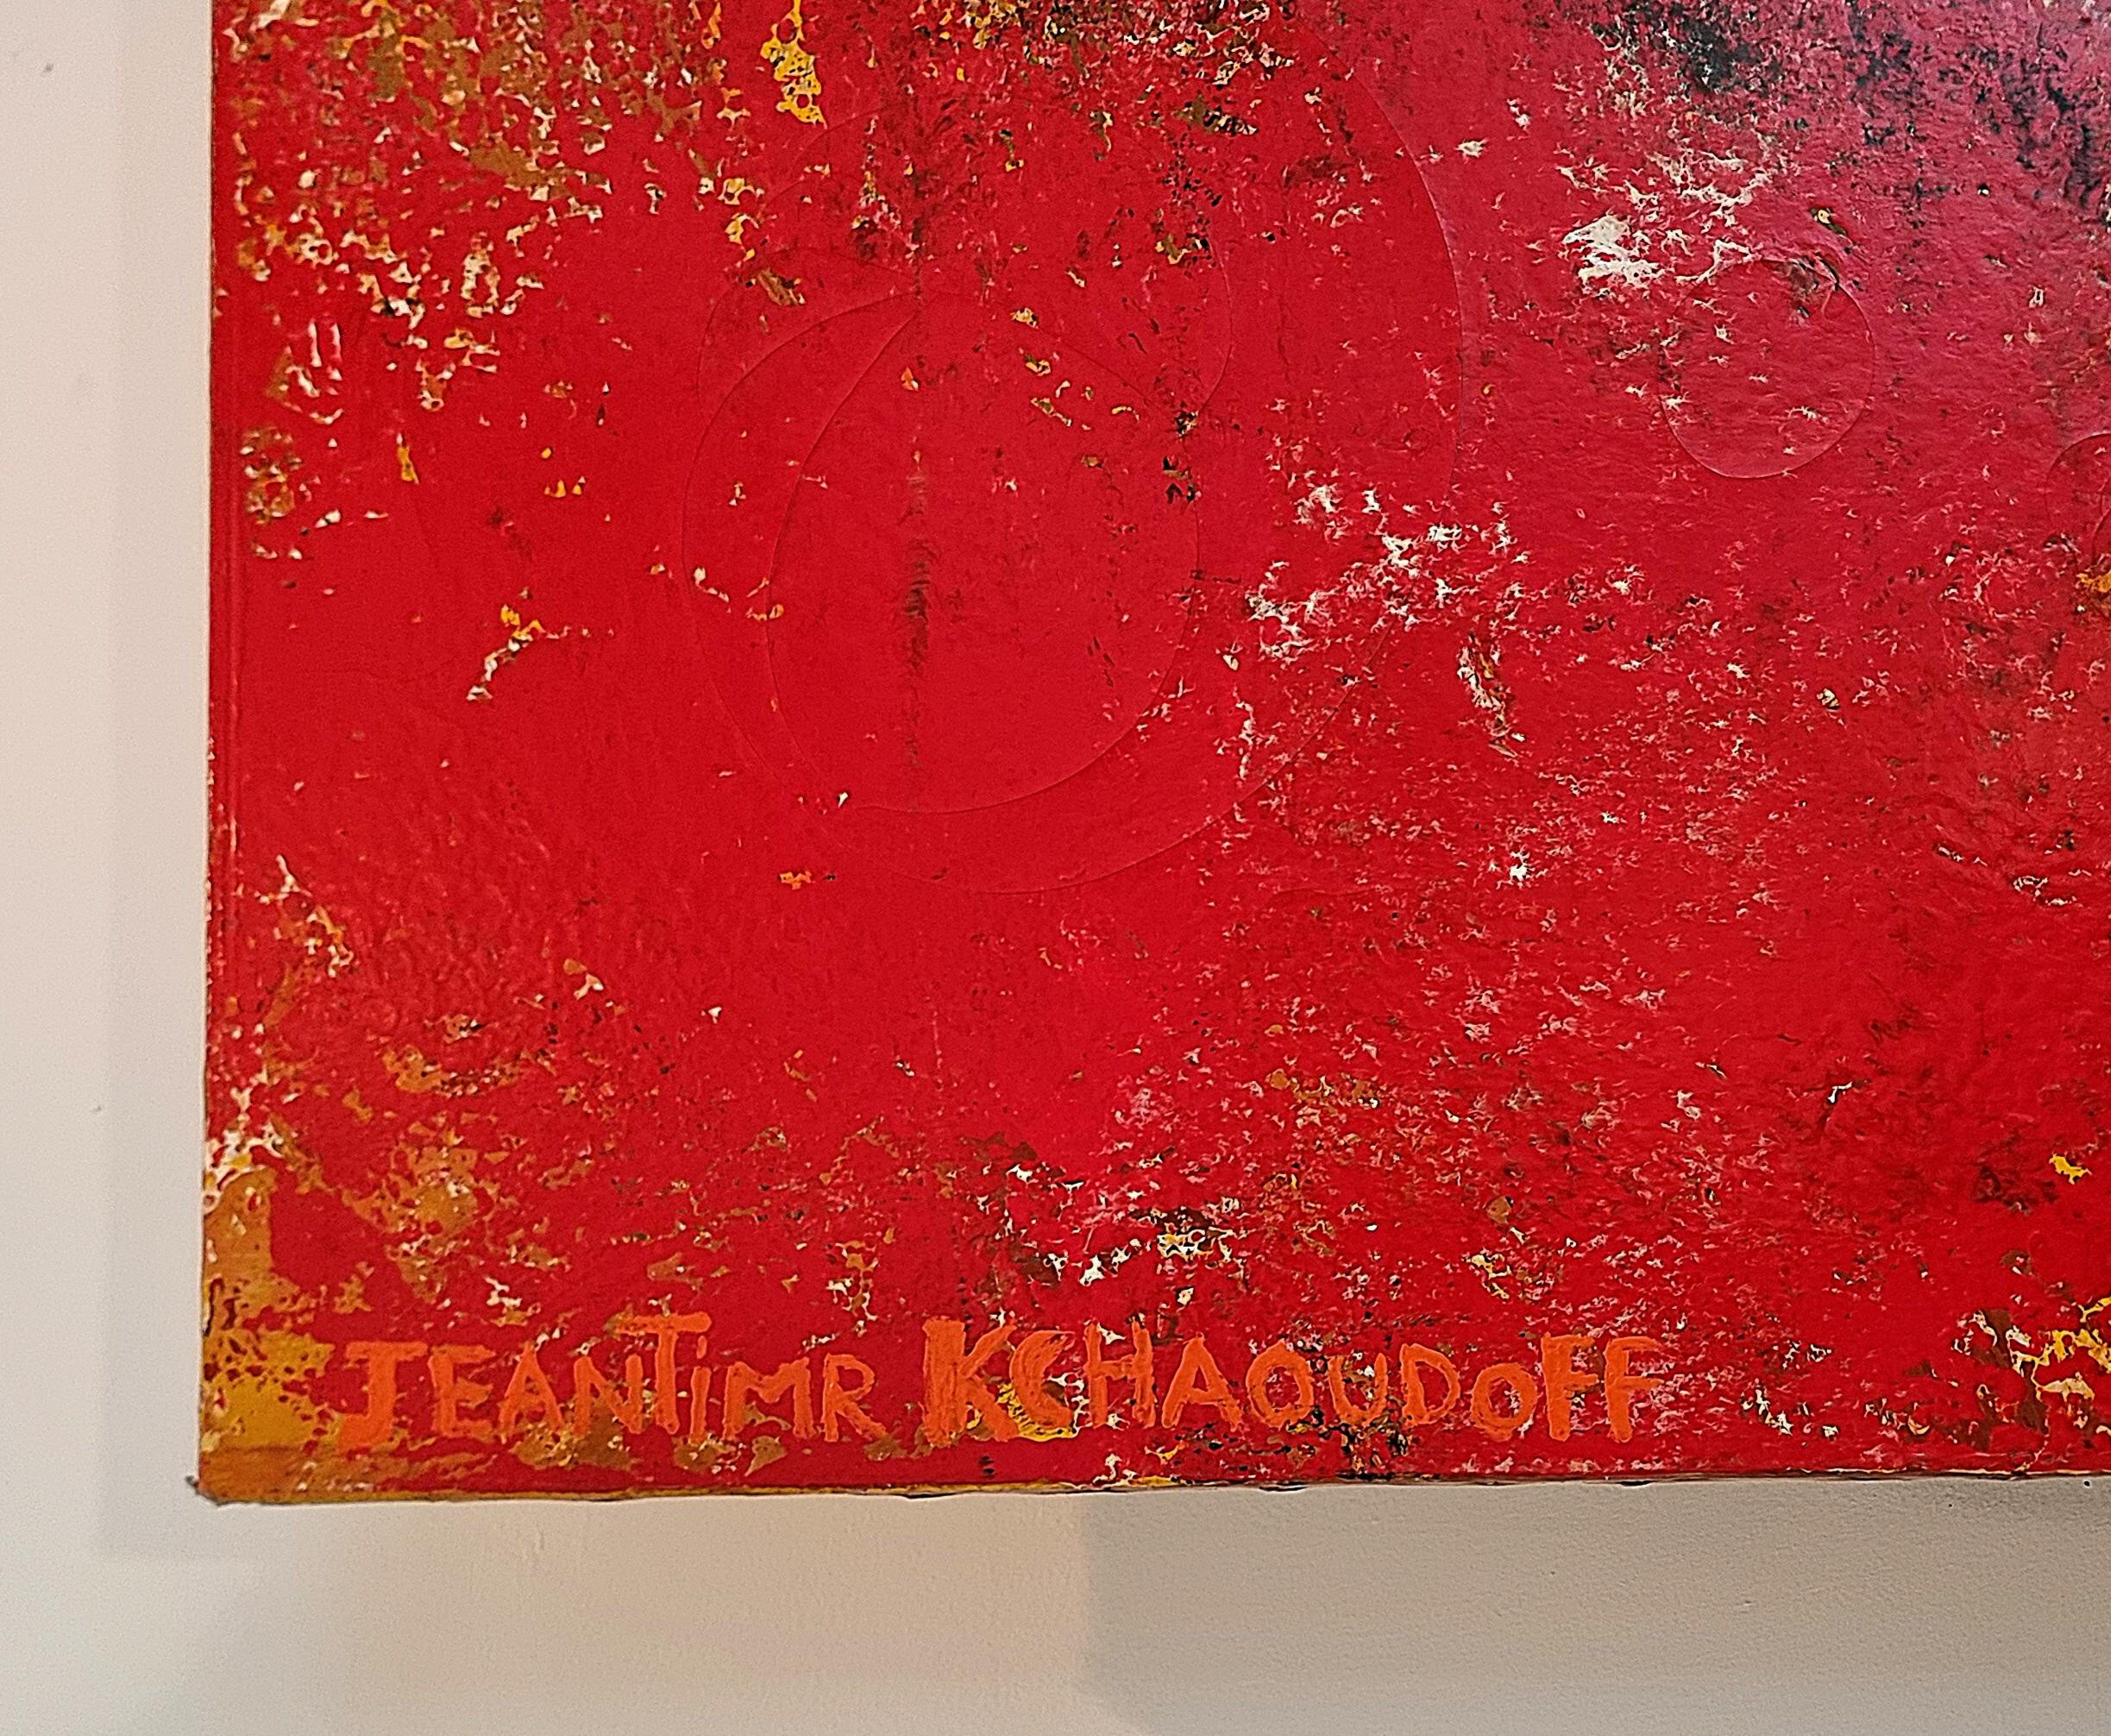 Mid-Century Modern Jeantimir Kchaoudoff - 180*200cm - Mixed Technique On Canvas - 1941-2017 For Sale